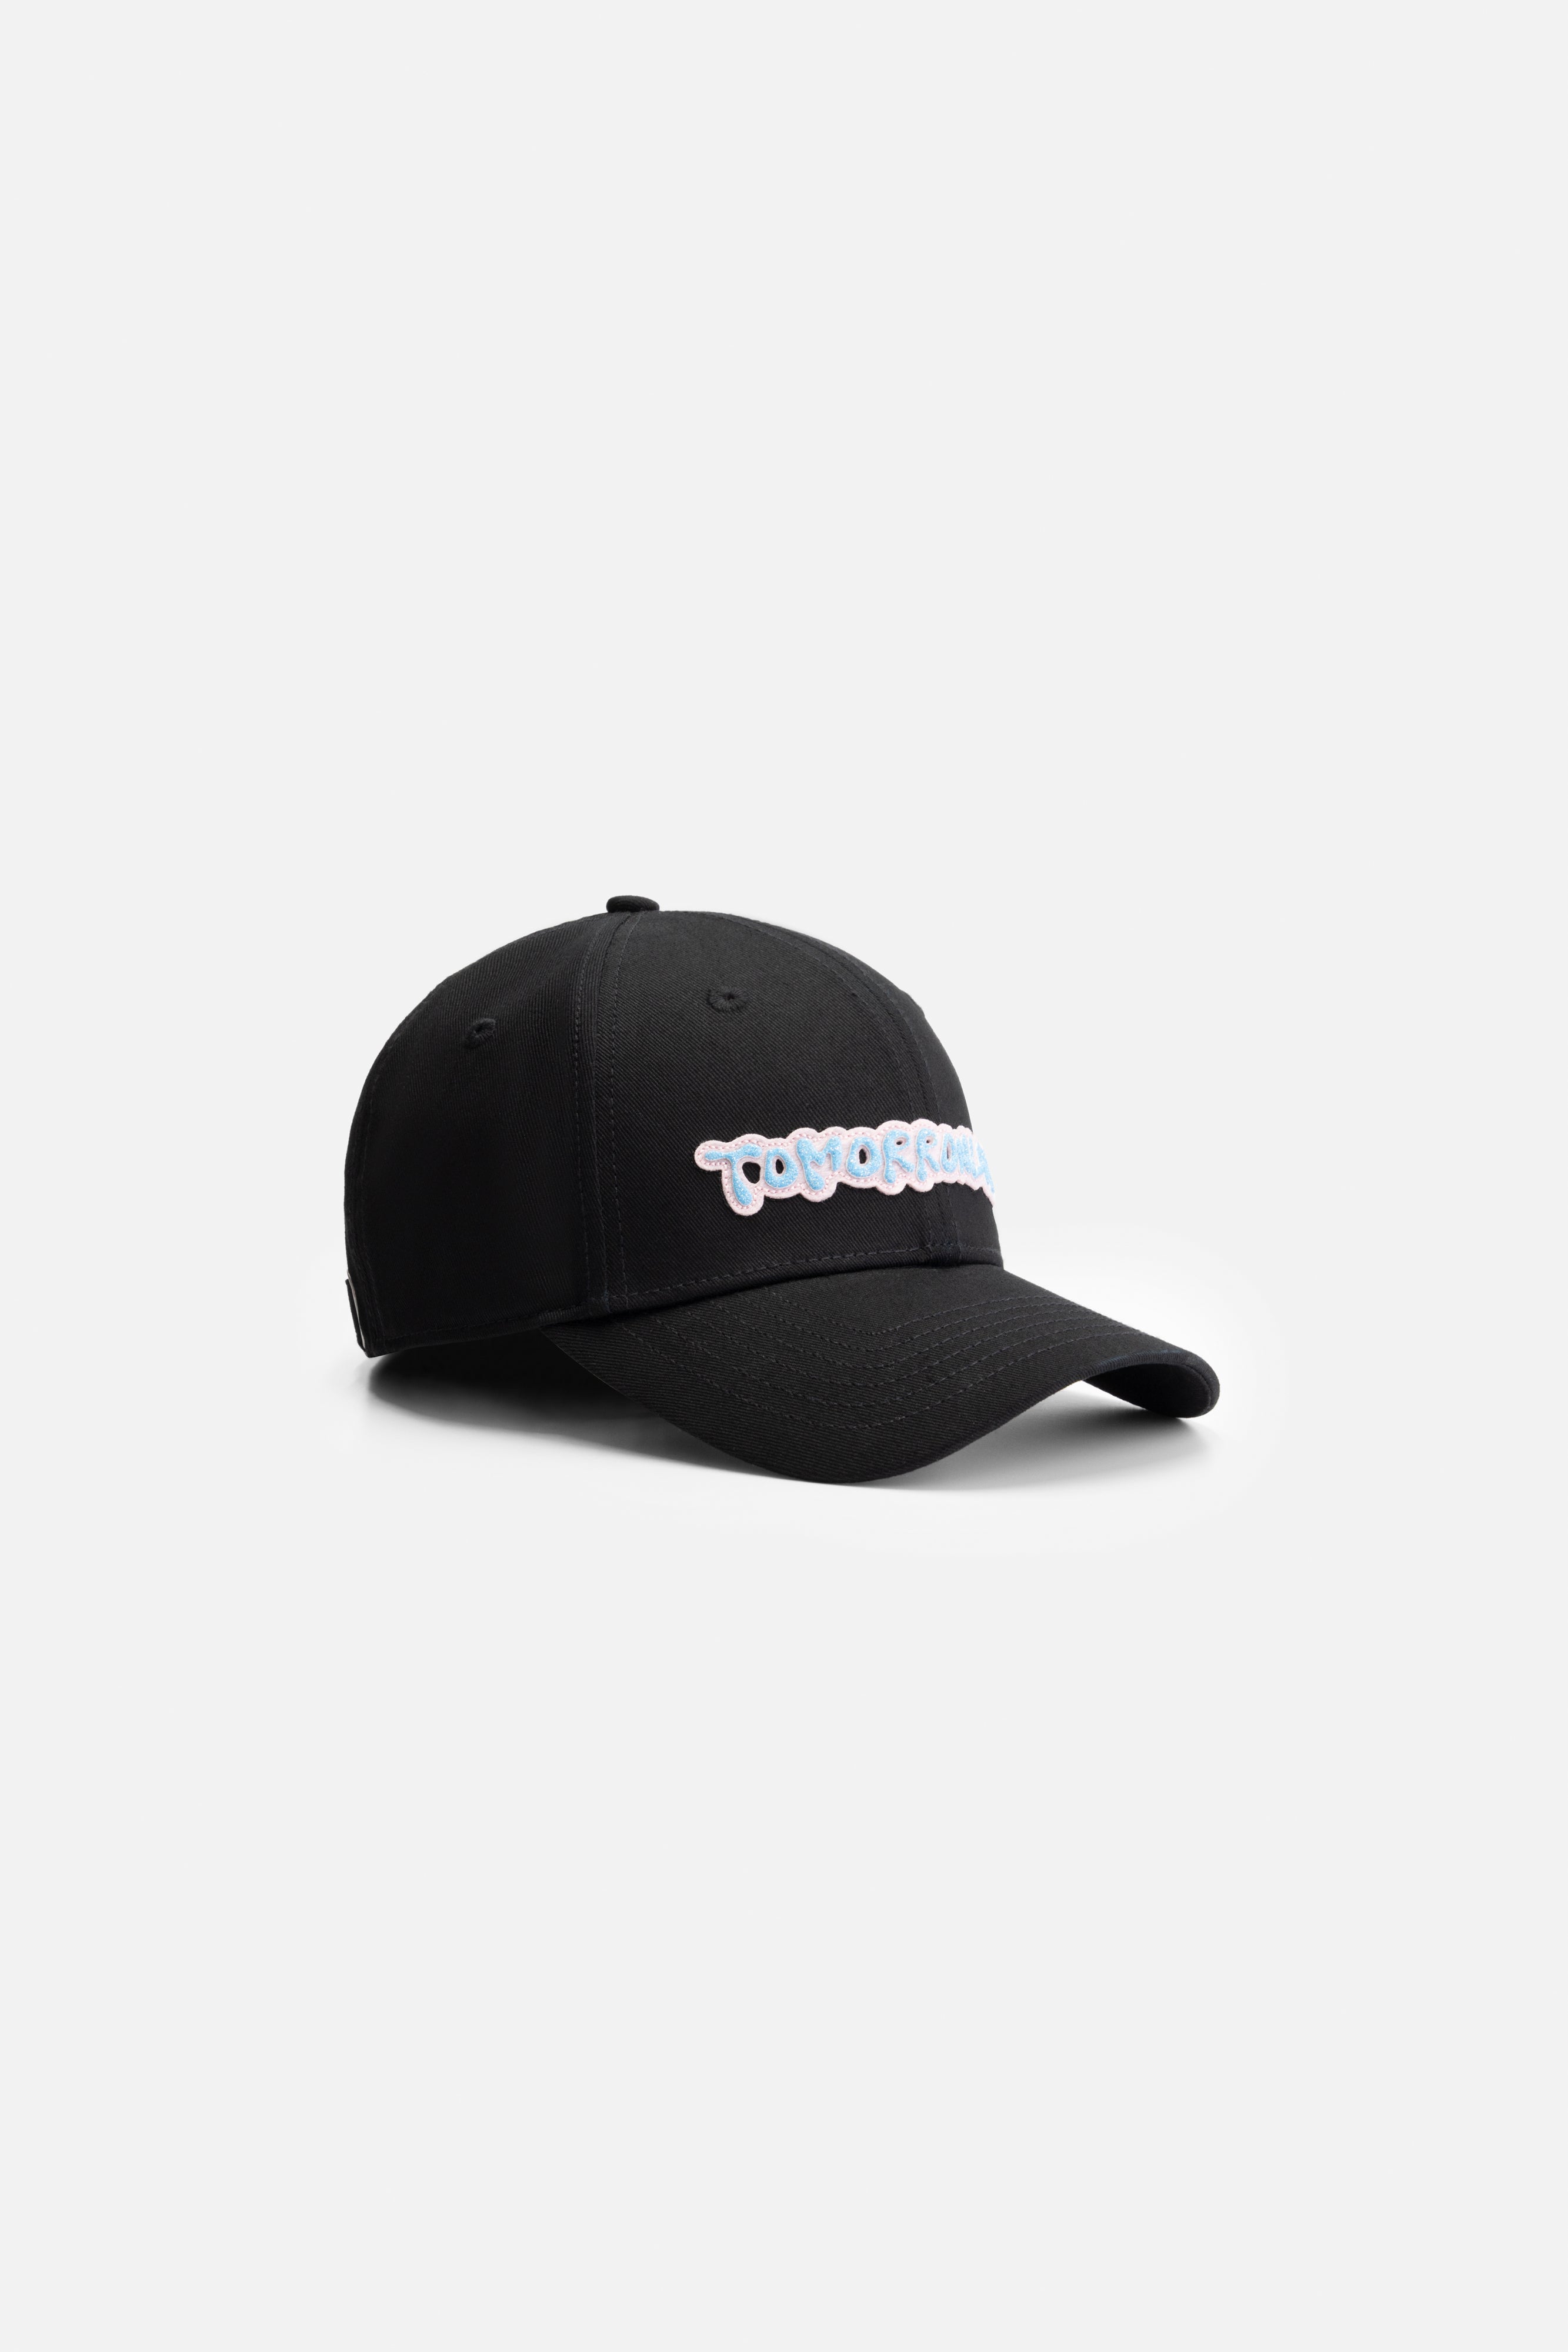 CAPS – Tomorrowland Store